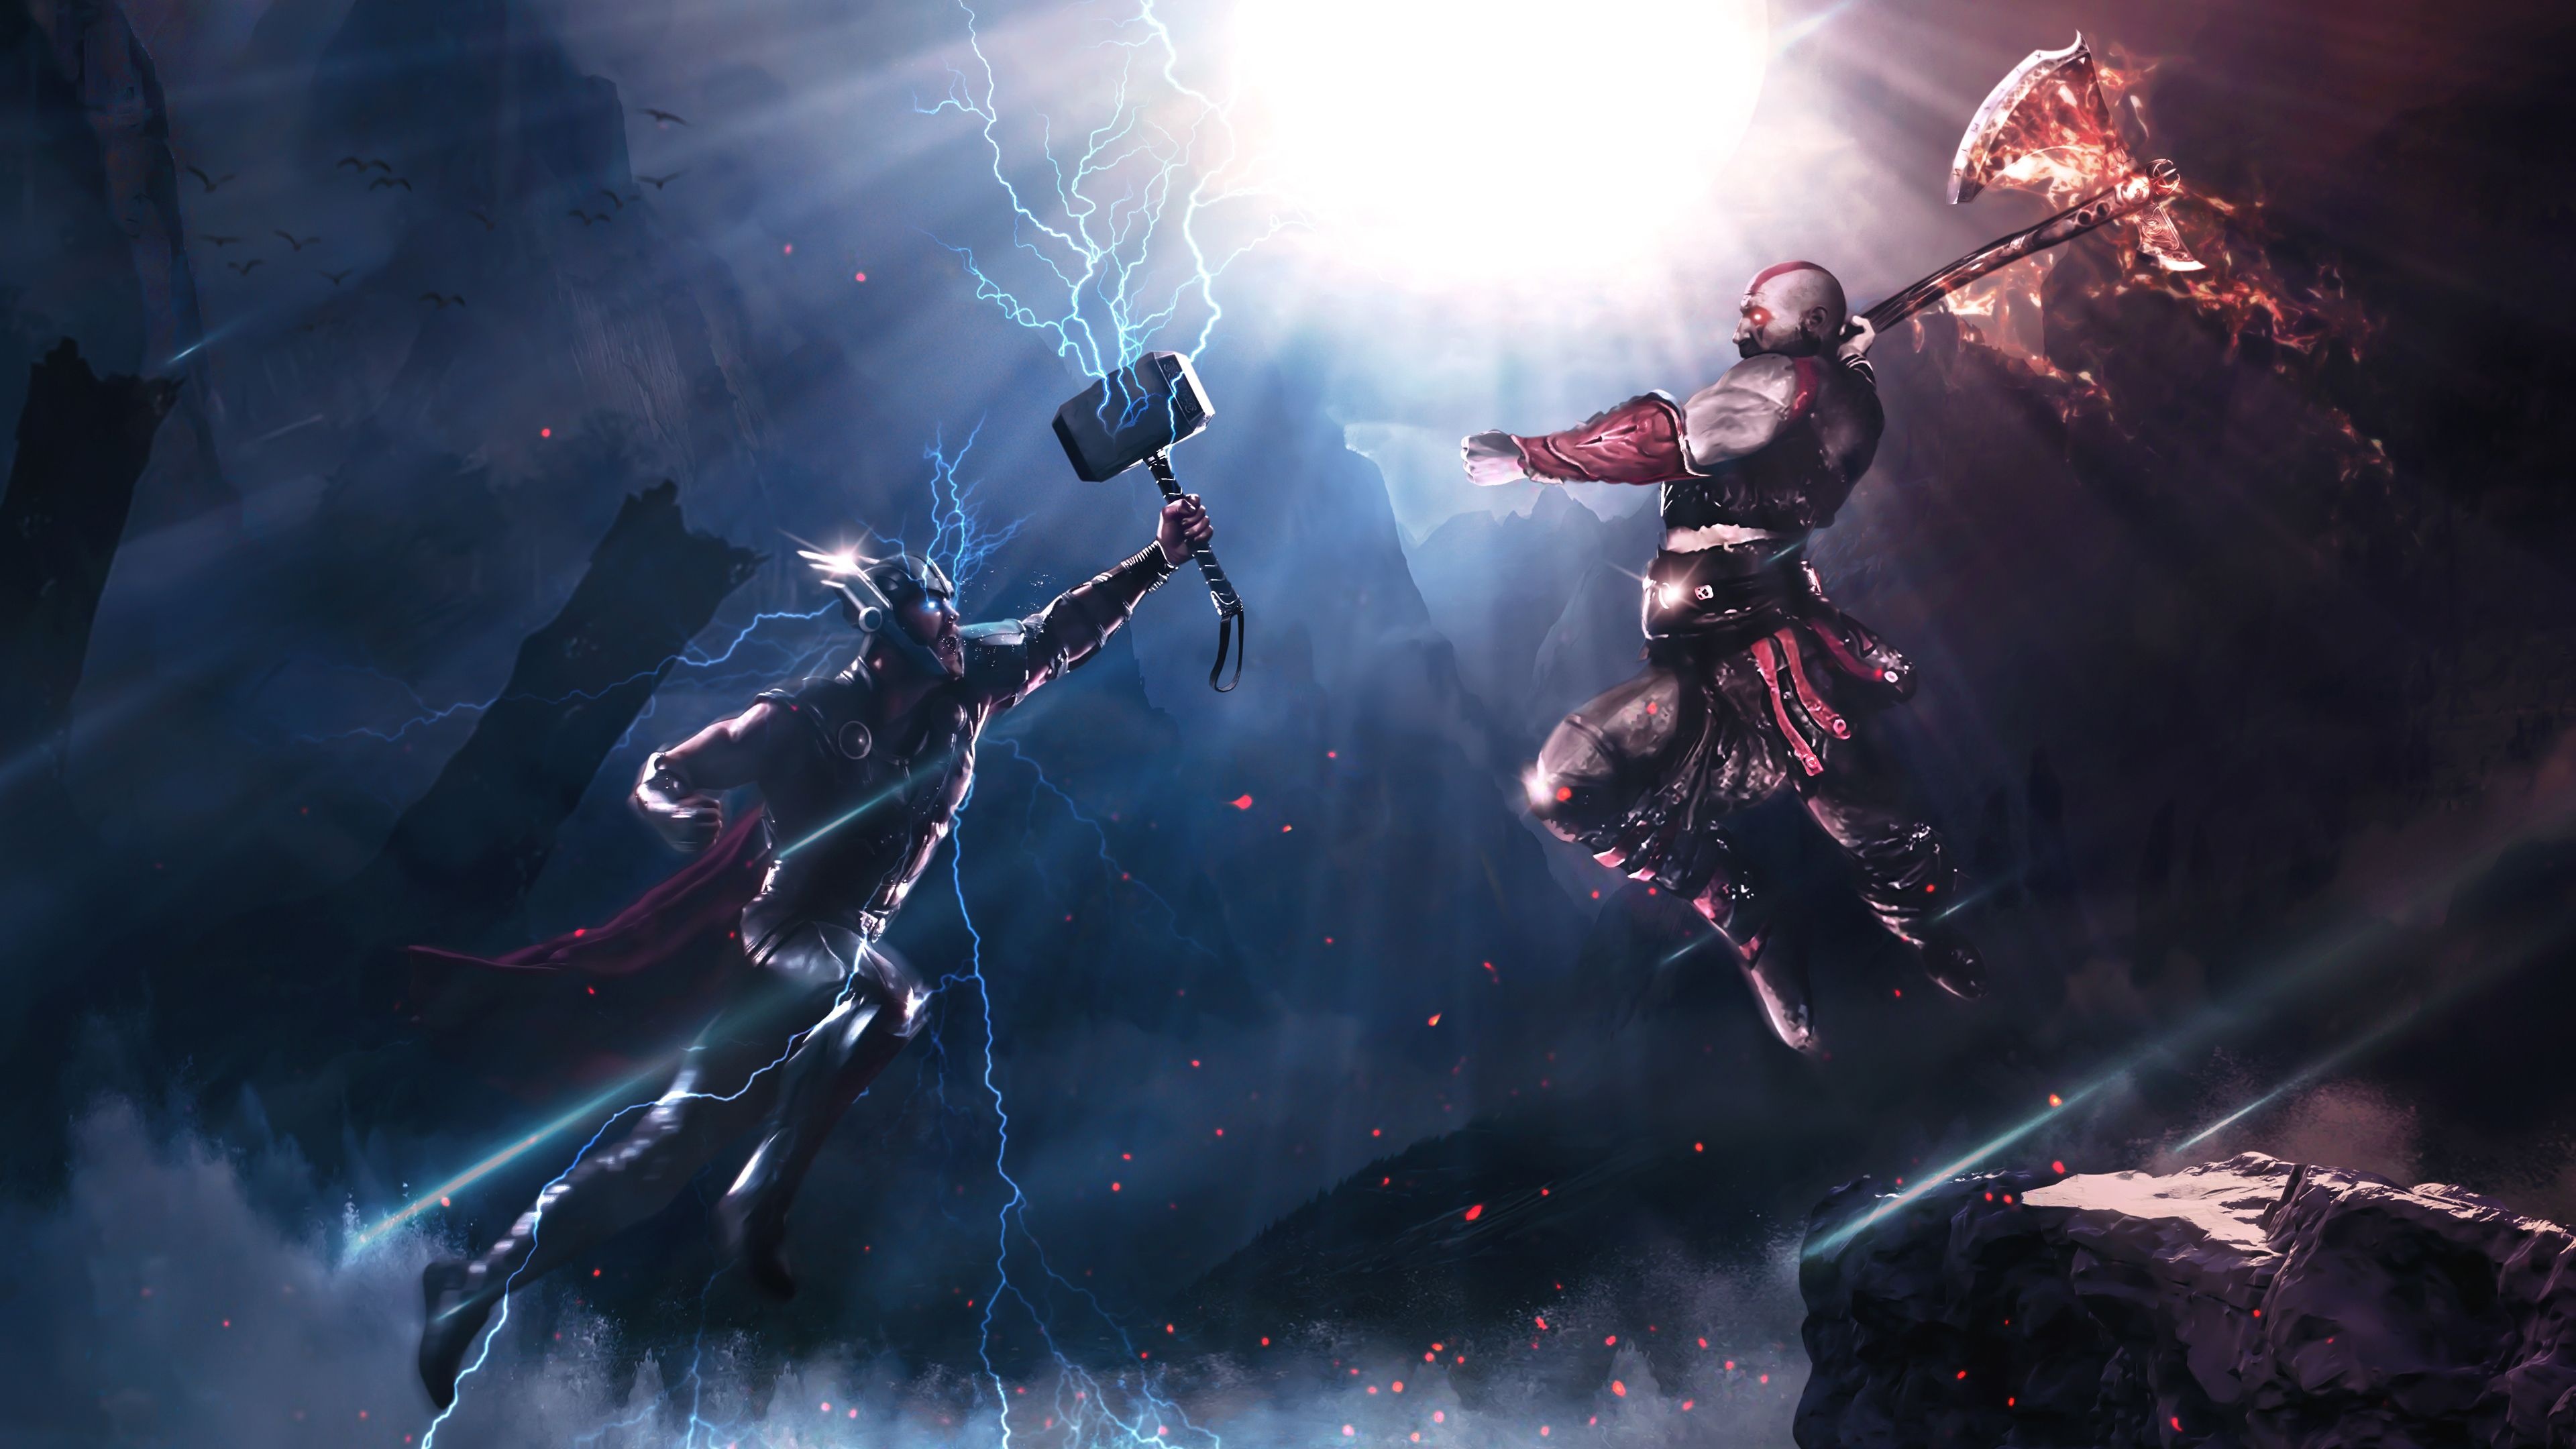 Thor vs Kratos, Superheroes wallpapers, Digital art, God of War, 3840x2160 4K Desktop